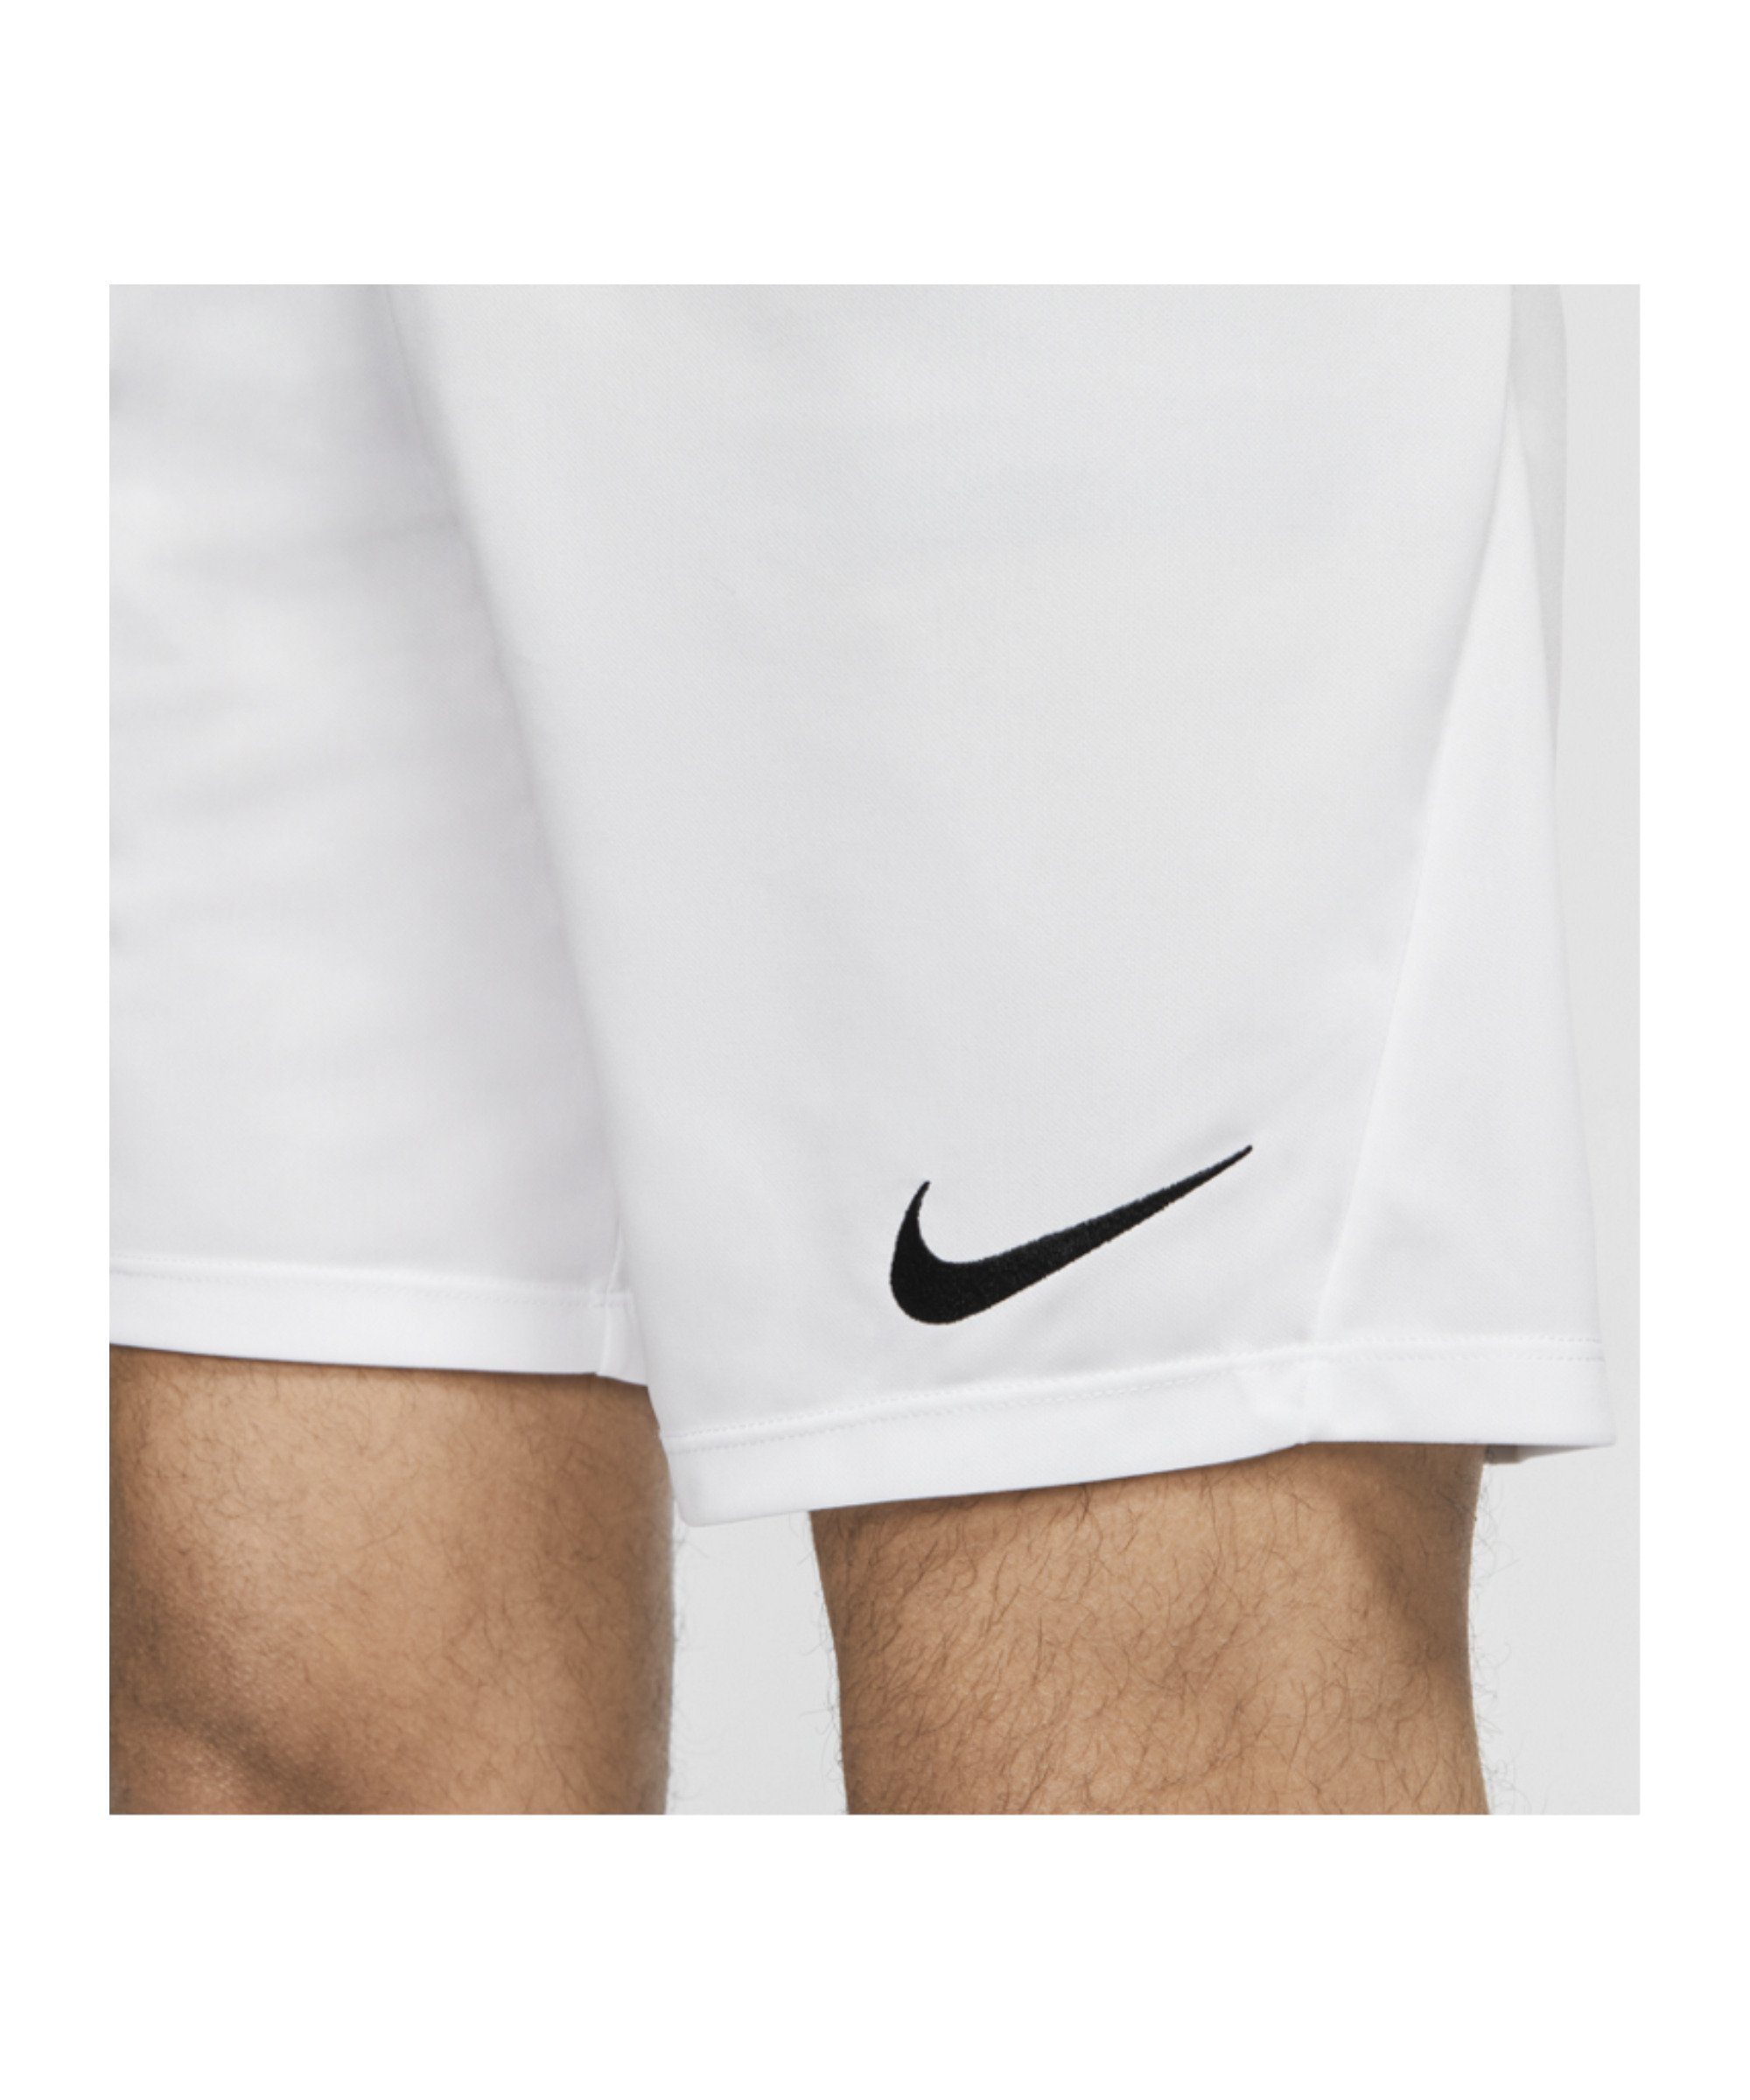 III Park Short weiss Nike Sporthose